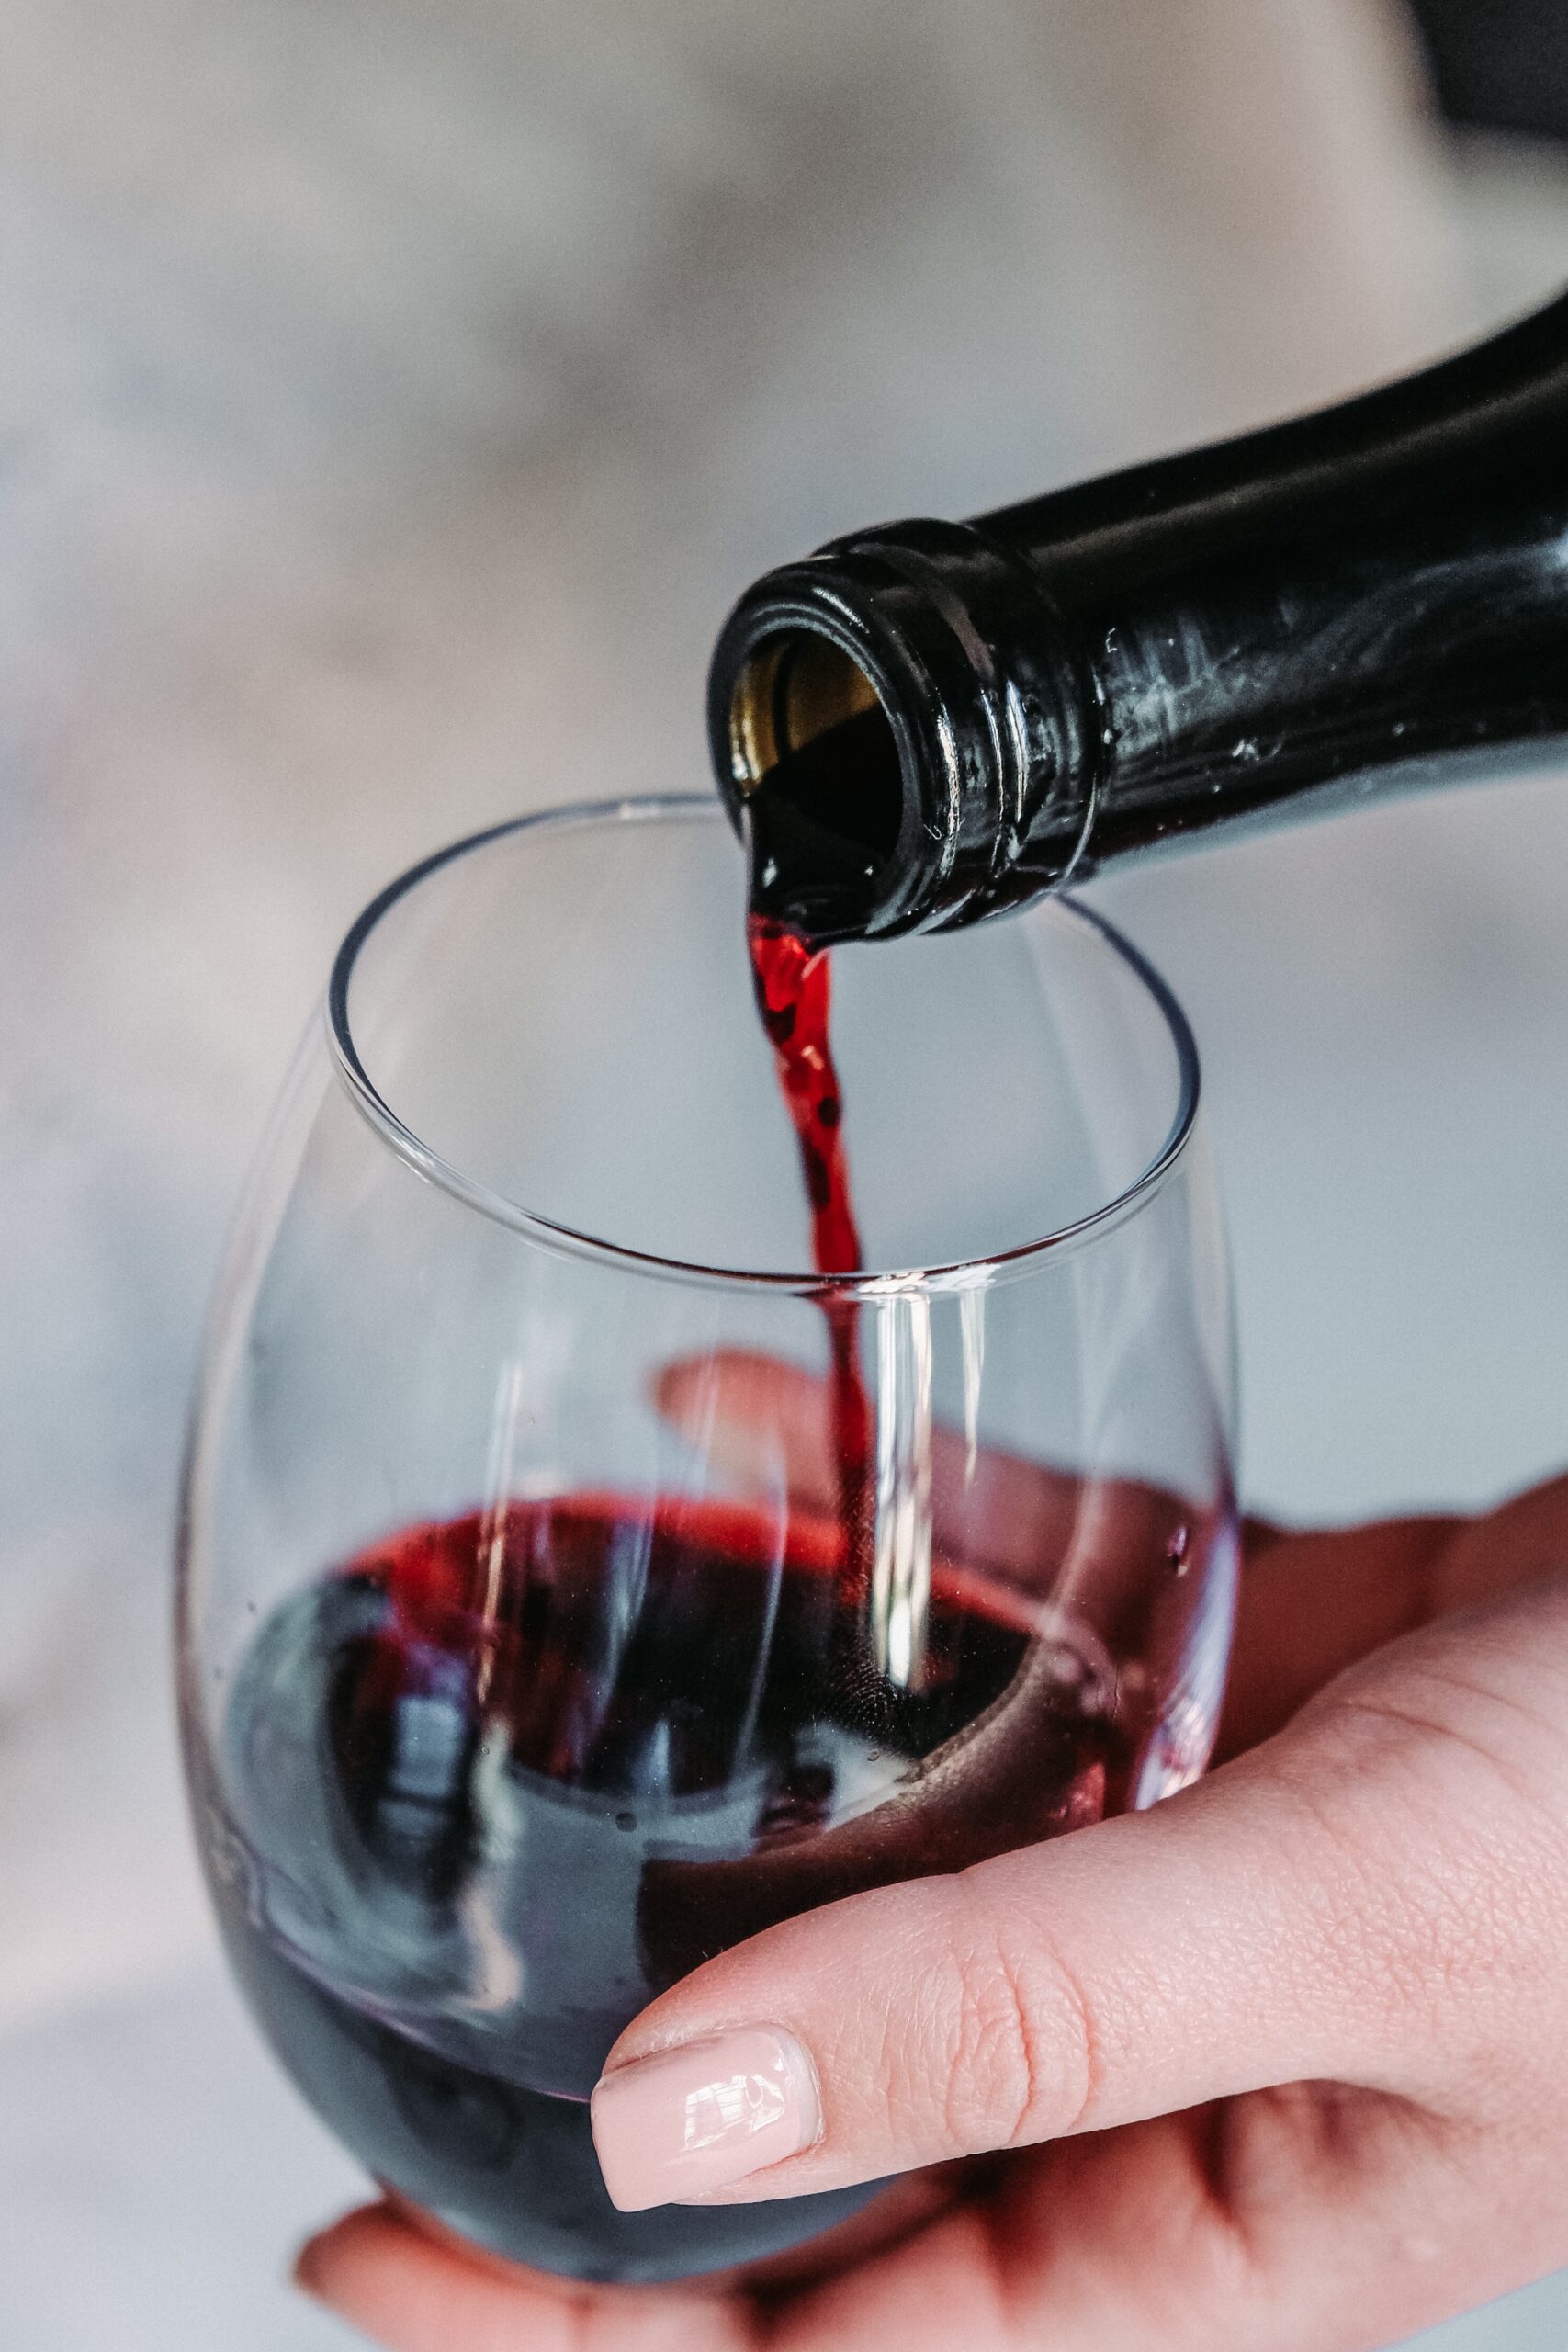 jeff-siepman-red wine pour in wine glass up close-unsplash